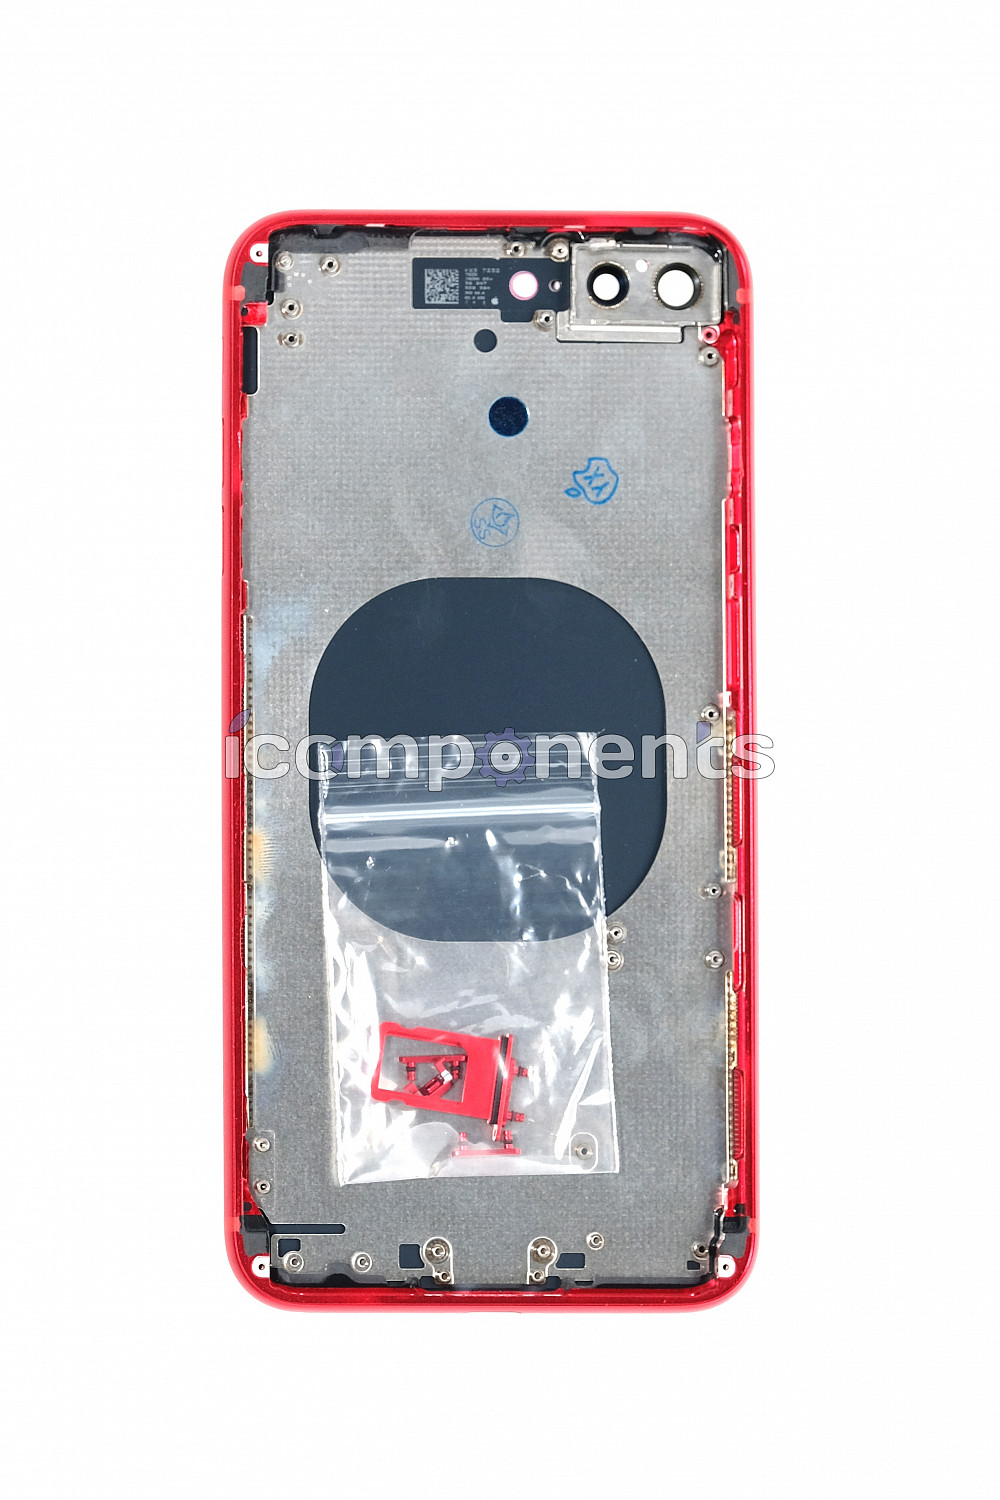 картинка iPhone 8+ - корпус/задняя крышка, product red от магазина Компания+